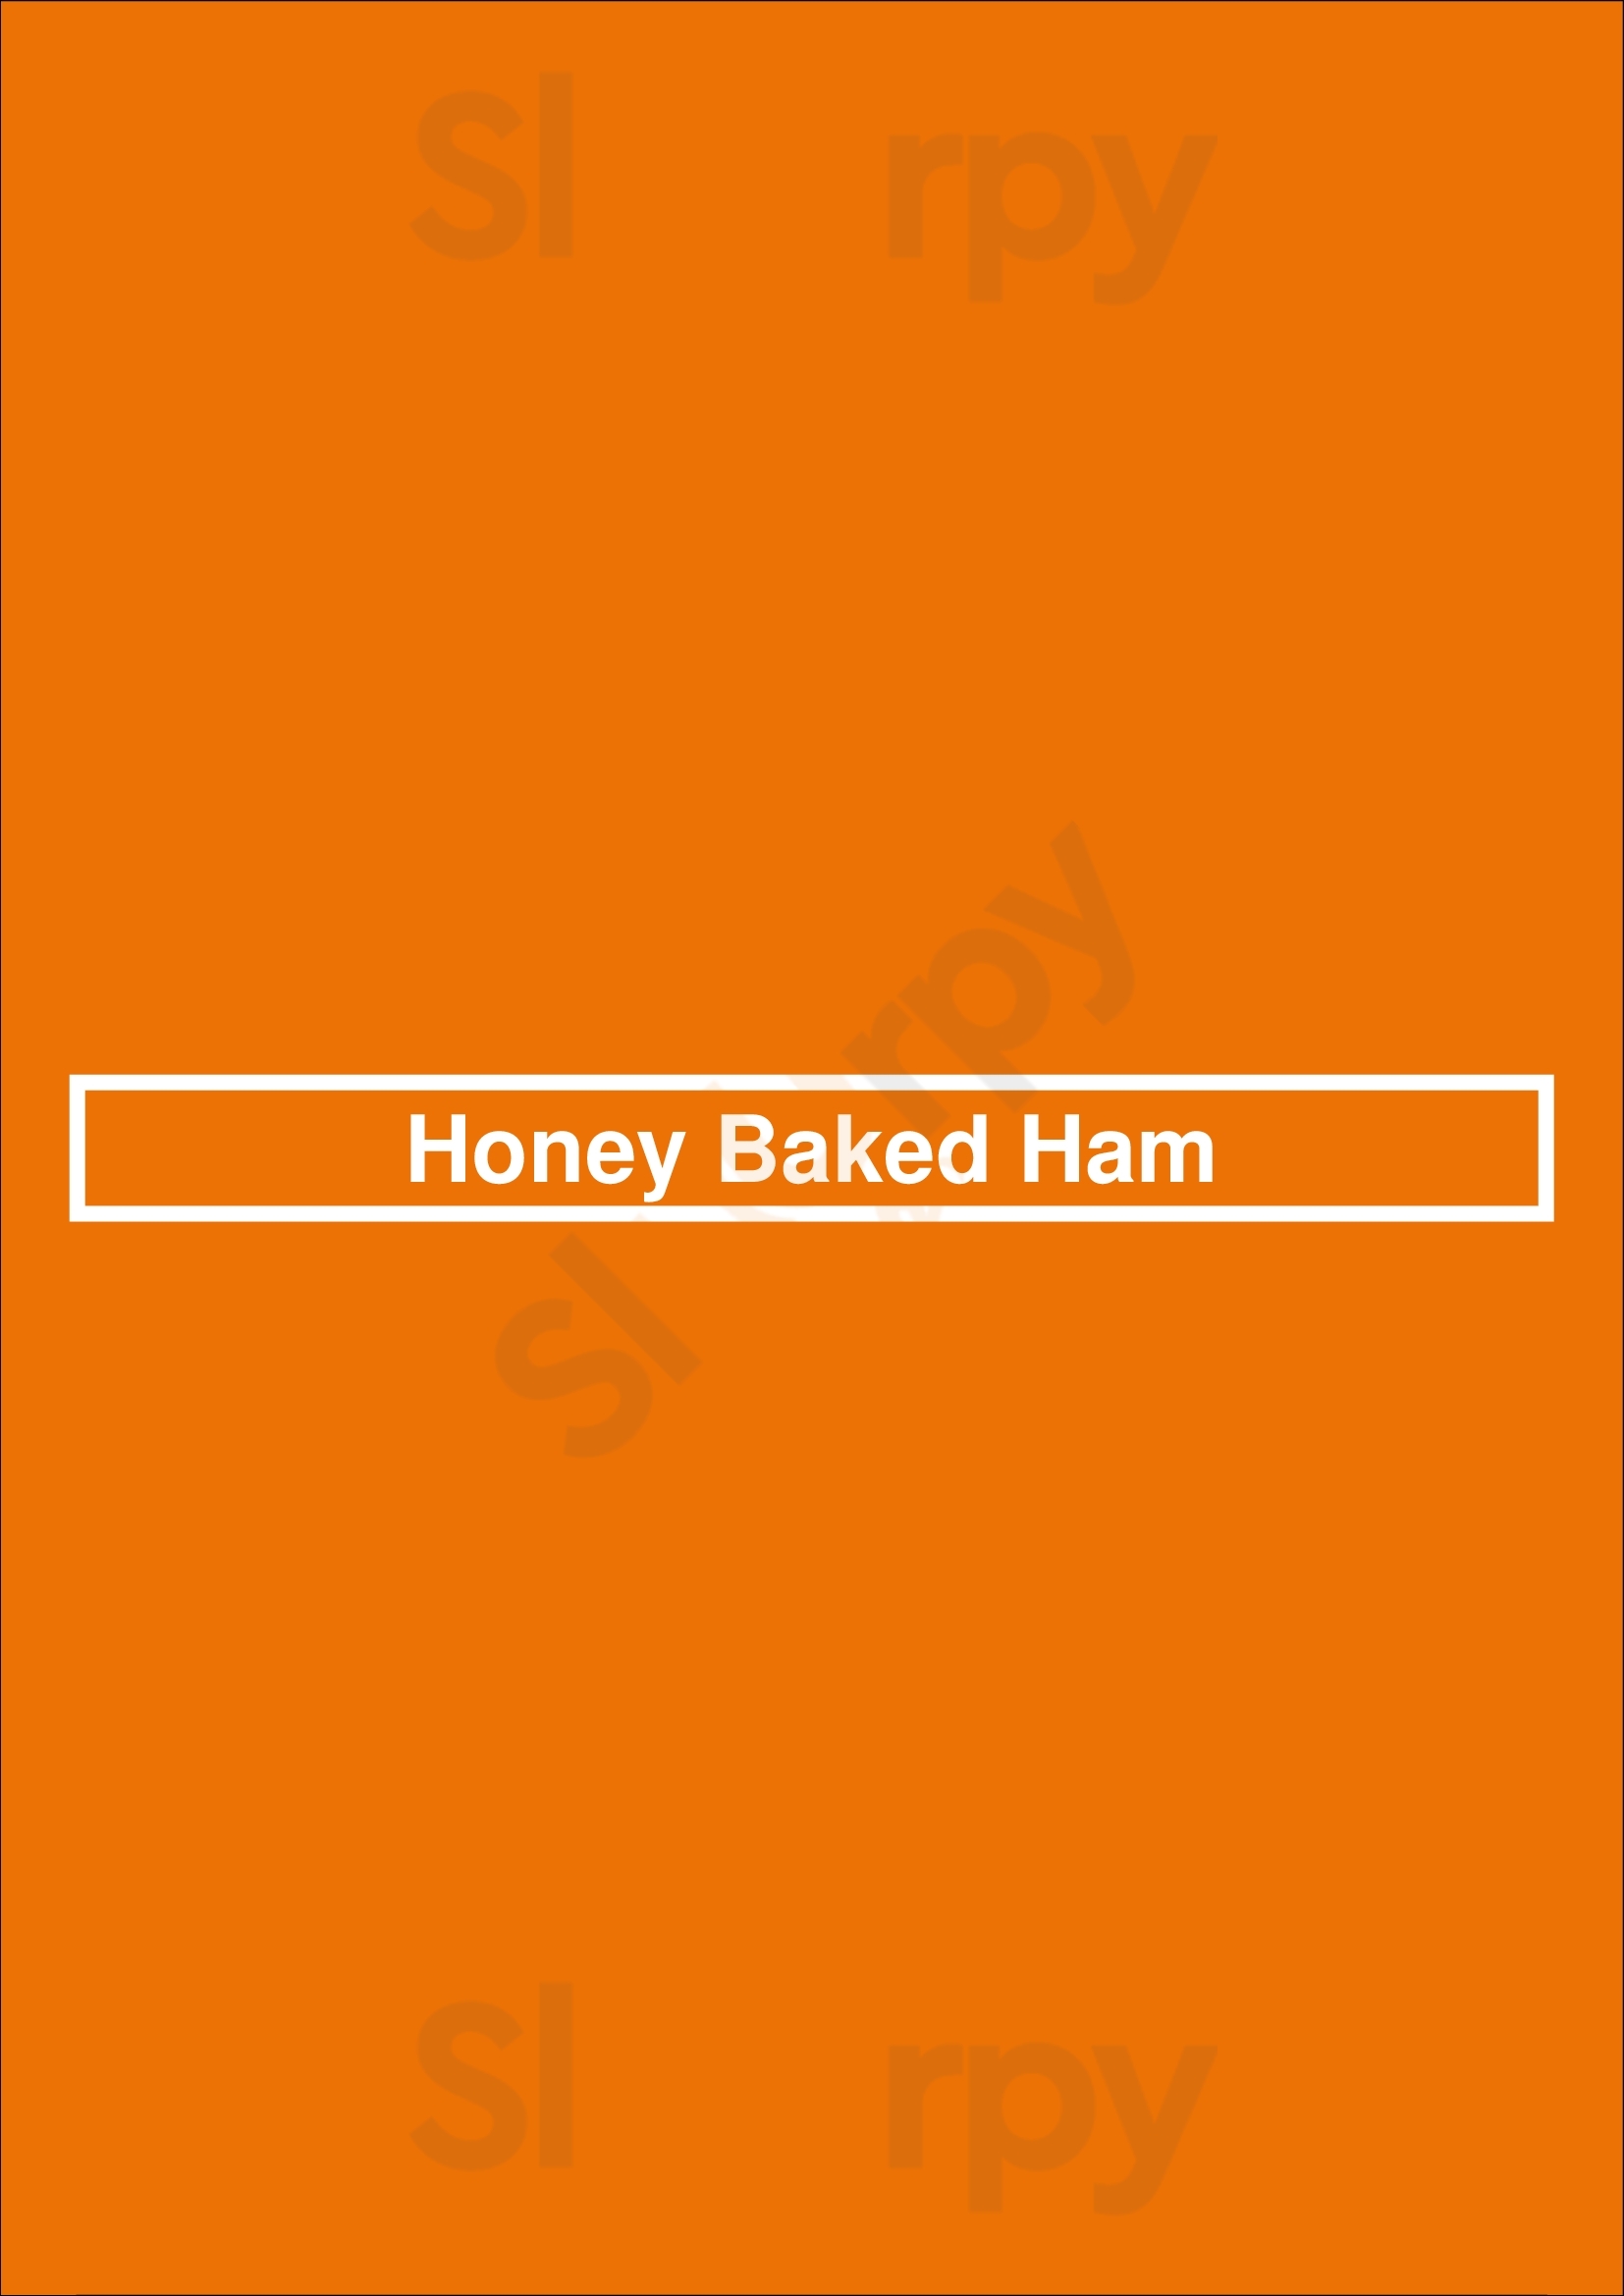 The Honey Baked Ham Company Orlando Menu - 1